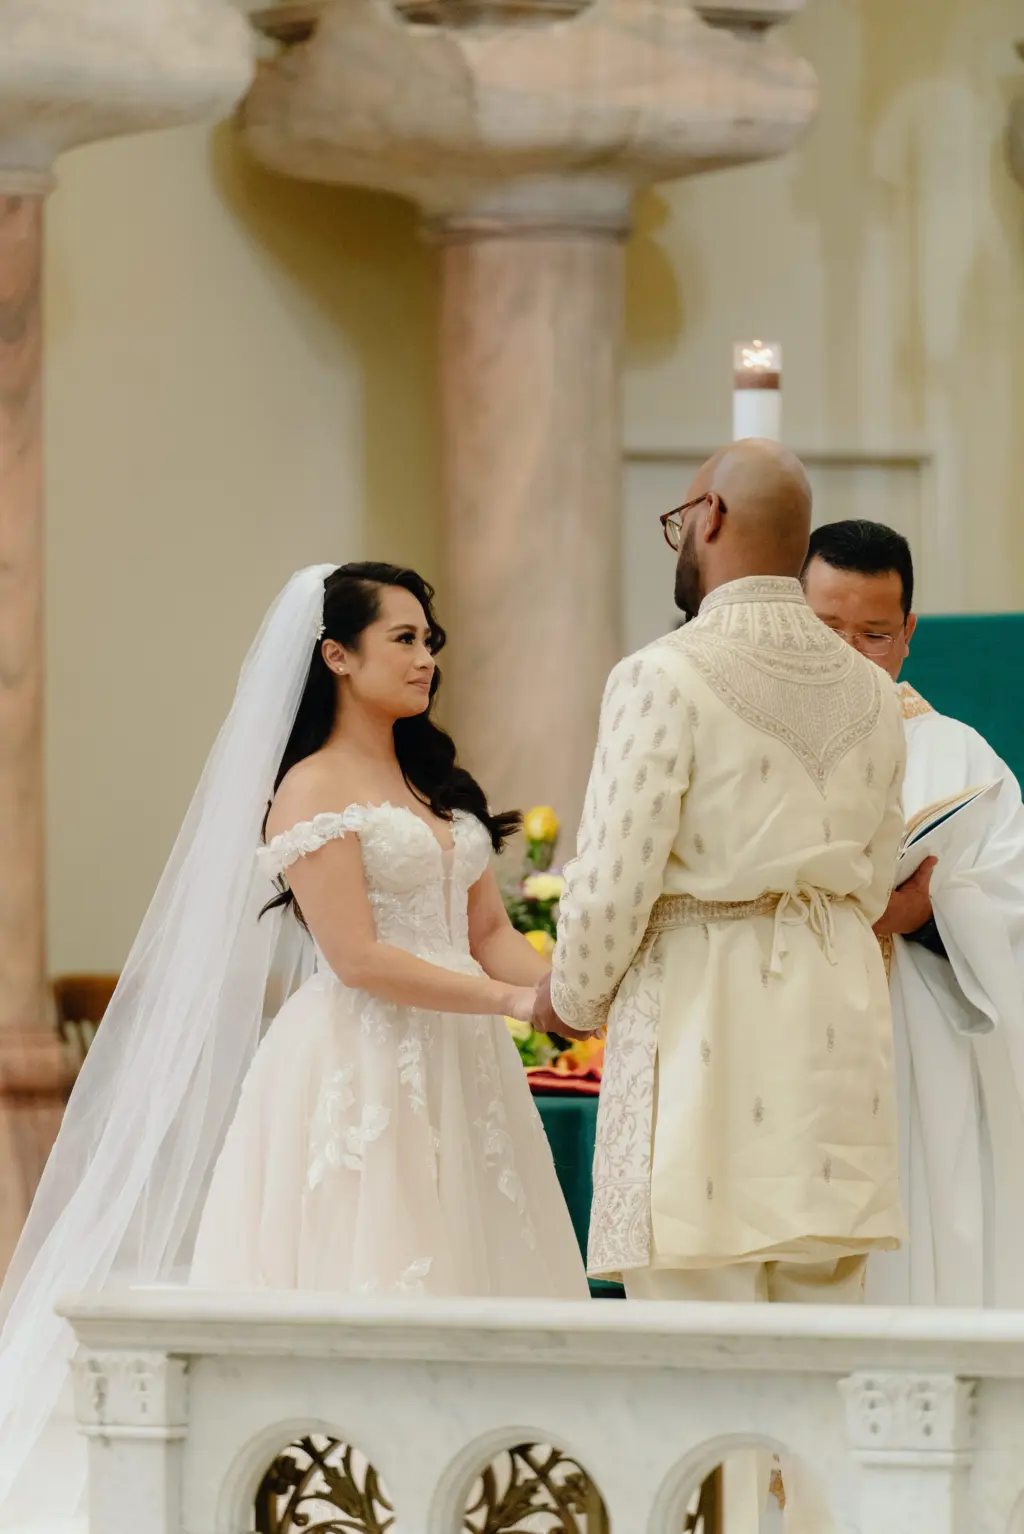 Bride and Groom Wedding Portrait in Catholic Church Wedding Ceremony | Tampa Church Sacred Heart Catholic Church